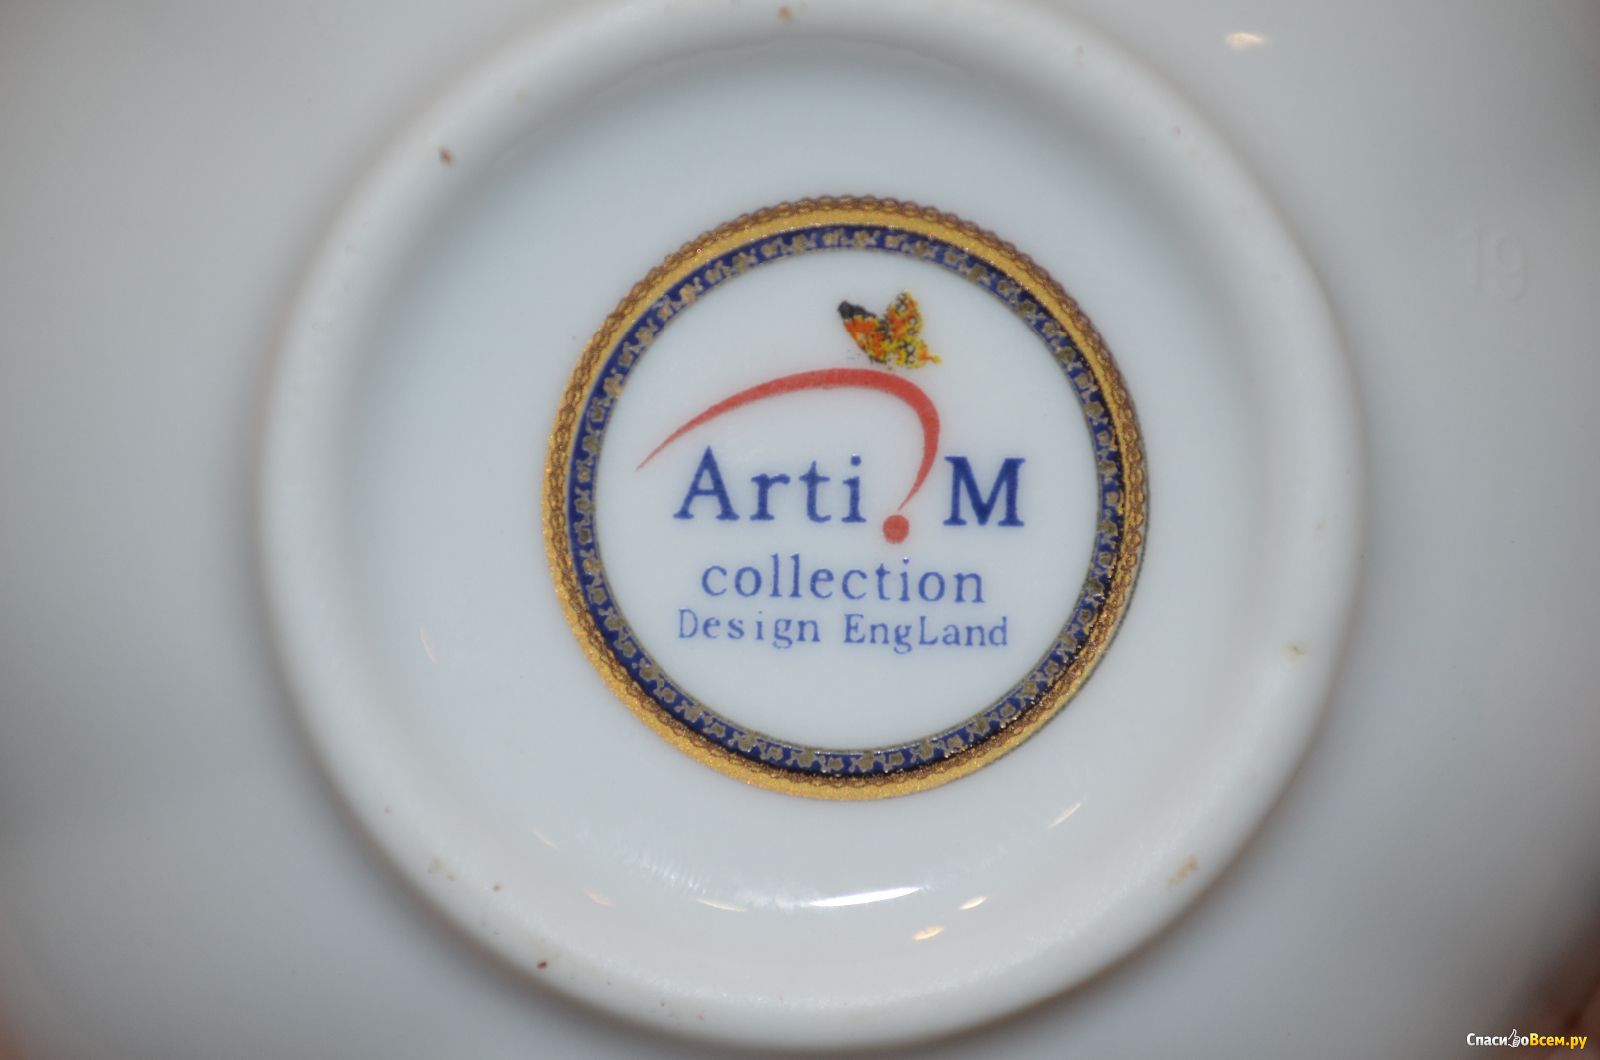 Arti m collection. Клеймо Arti m collection. Тарелка с клеймом Arti-m collection. Клеймо на посуде Arti m collection. Чашка Arti m collection Design England.